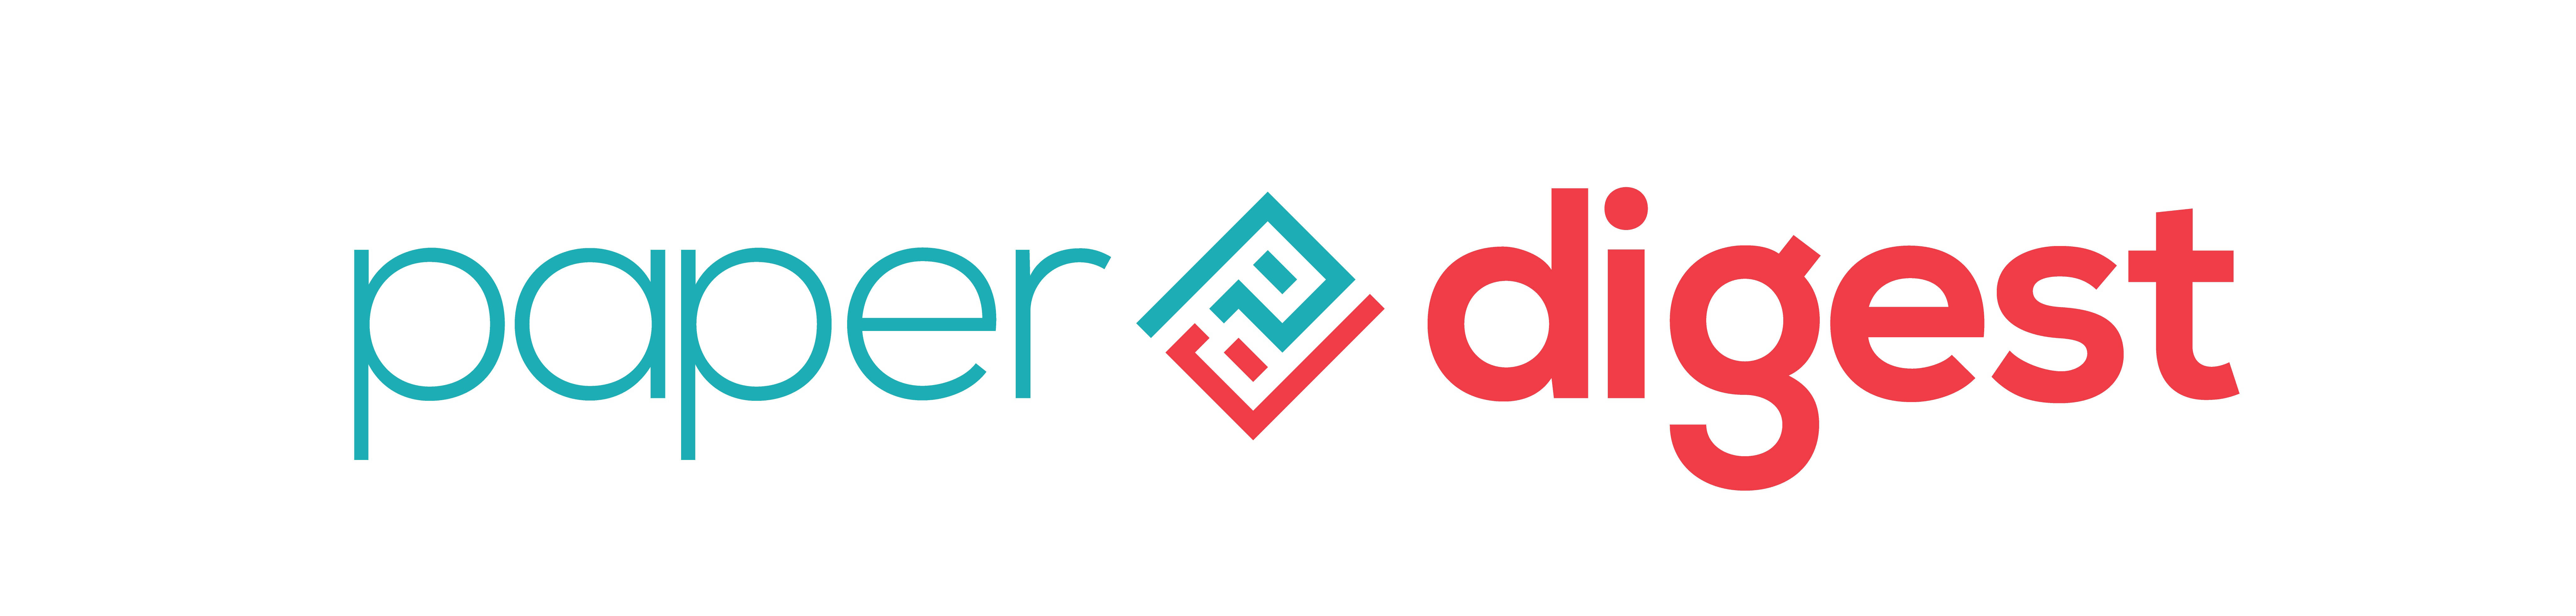 paper digest logo